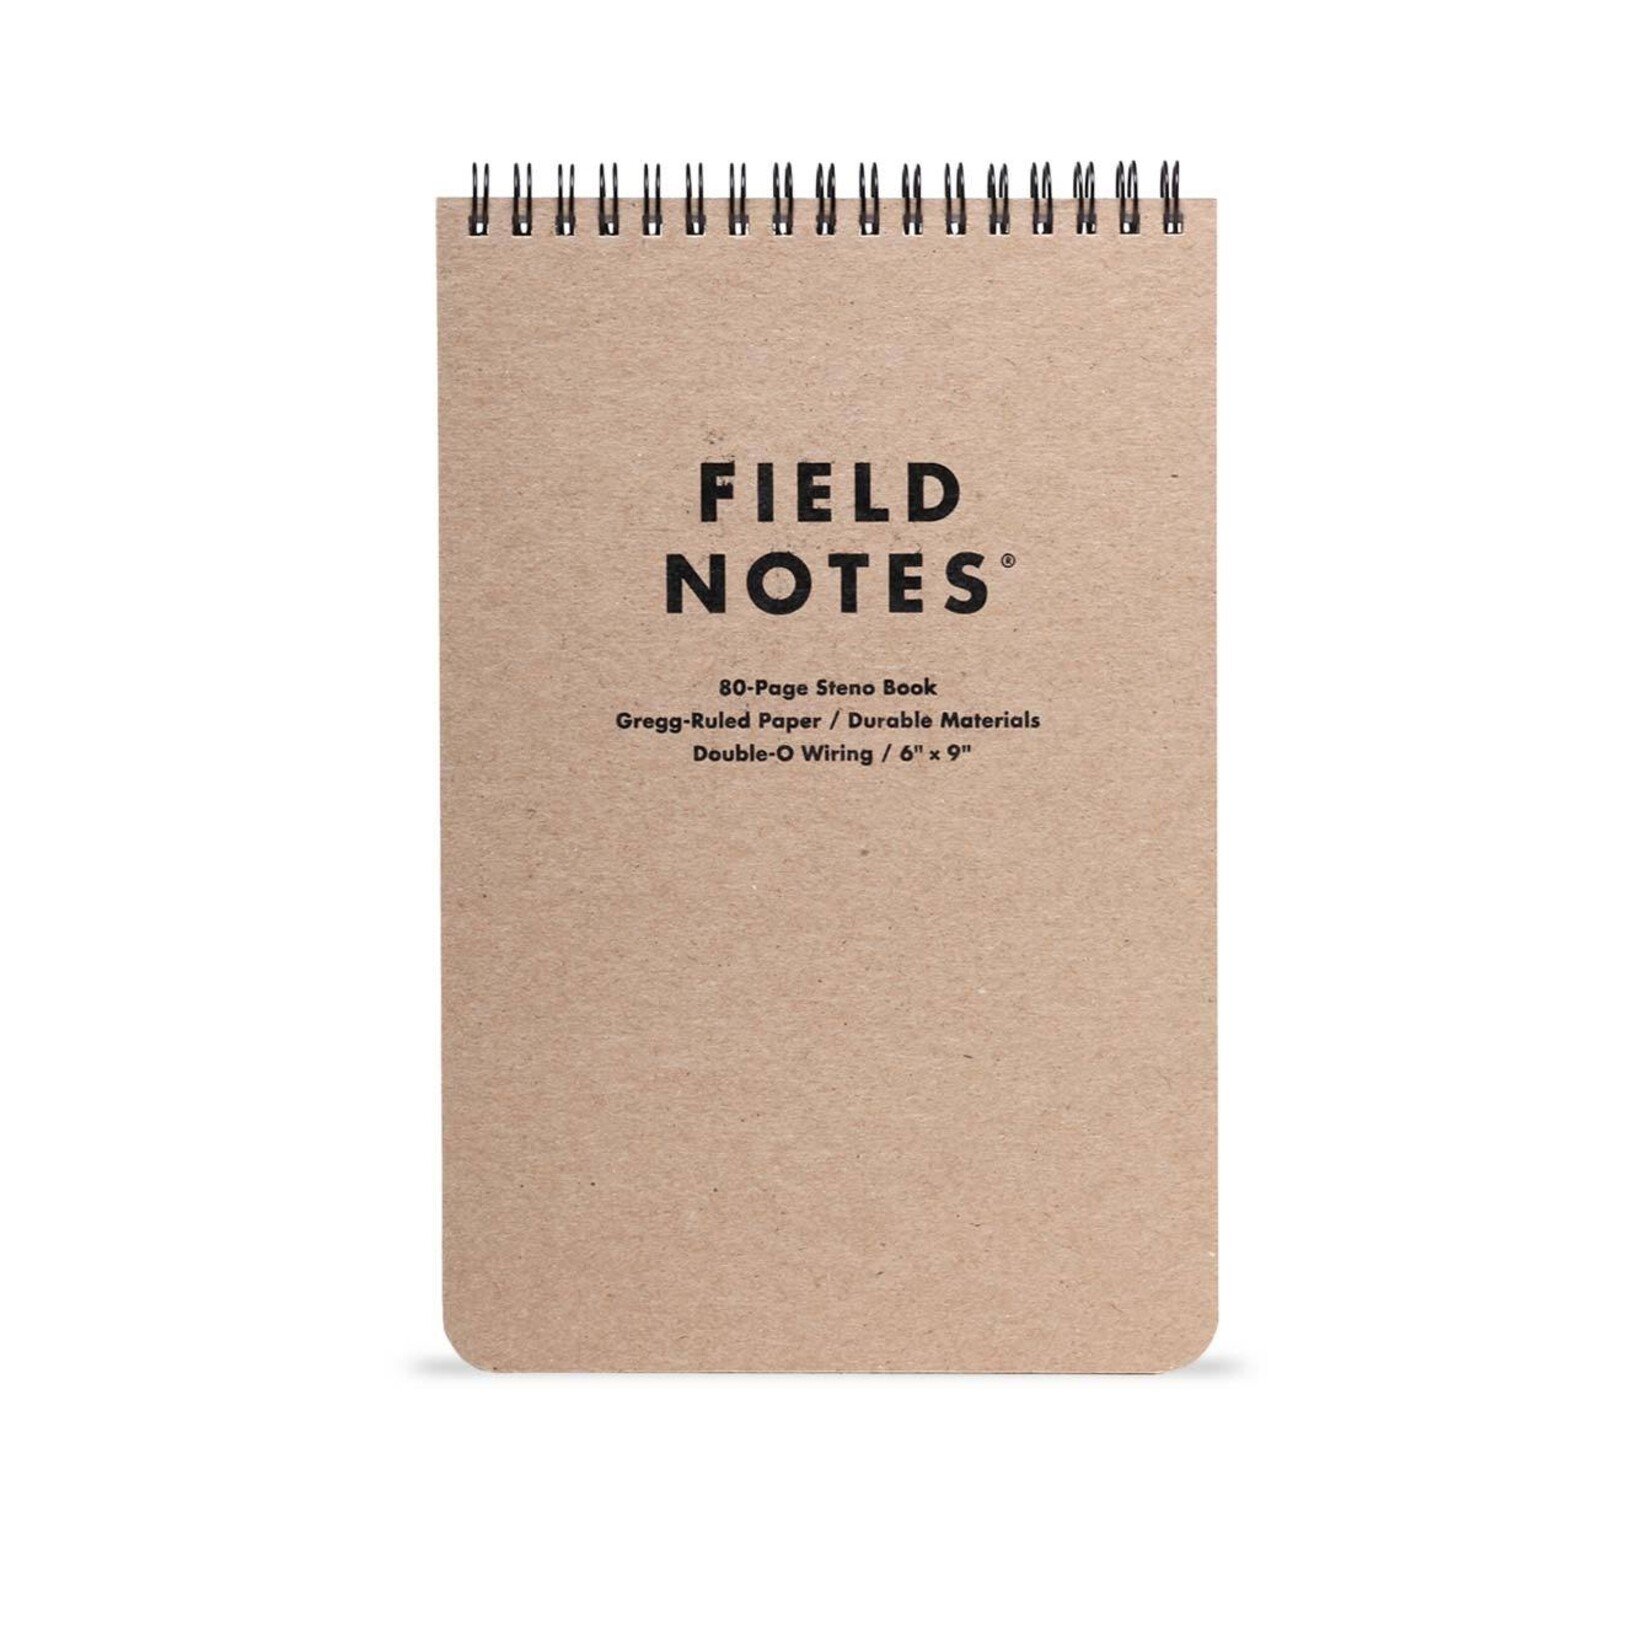 Field Notes SINGLE STENO PAD GREGG-RULED